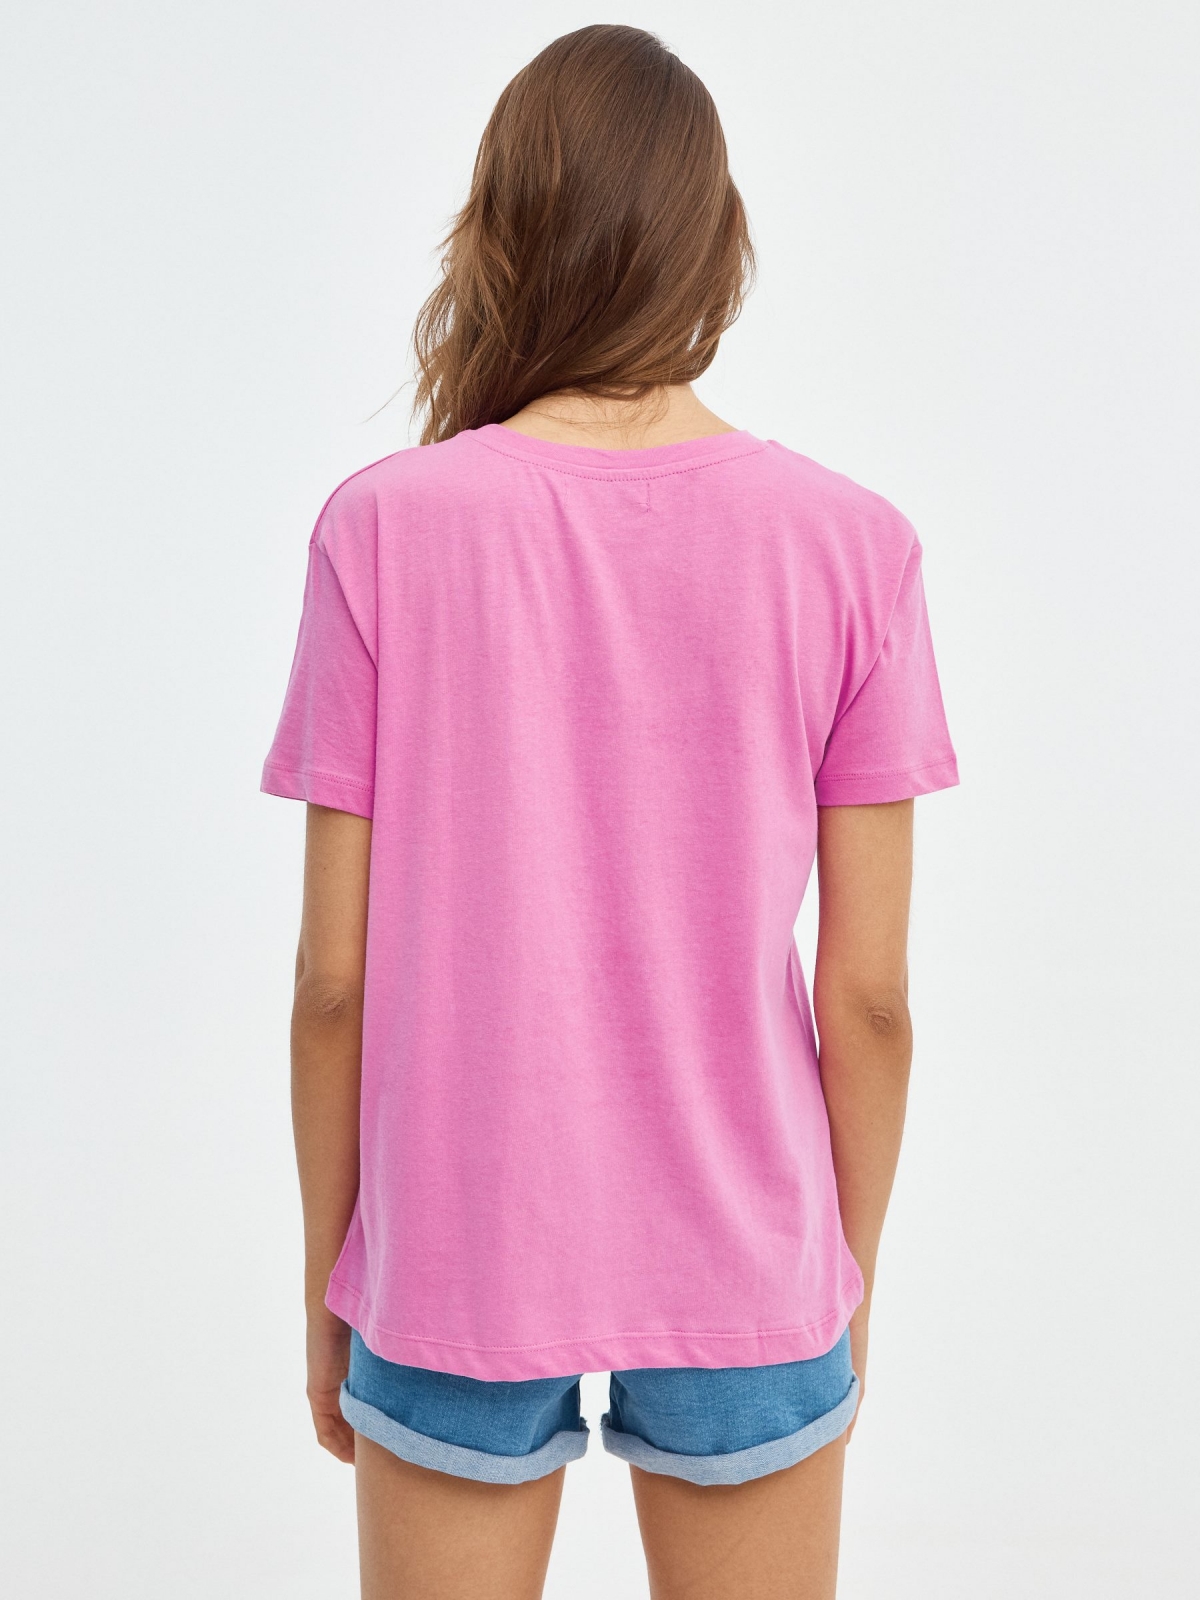 Camiseta oversized Music rosa vista media trasera